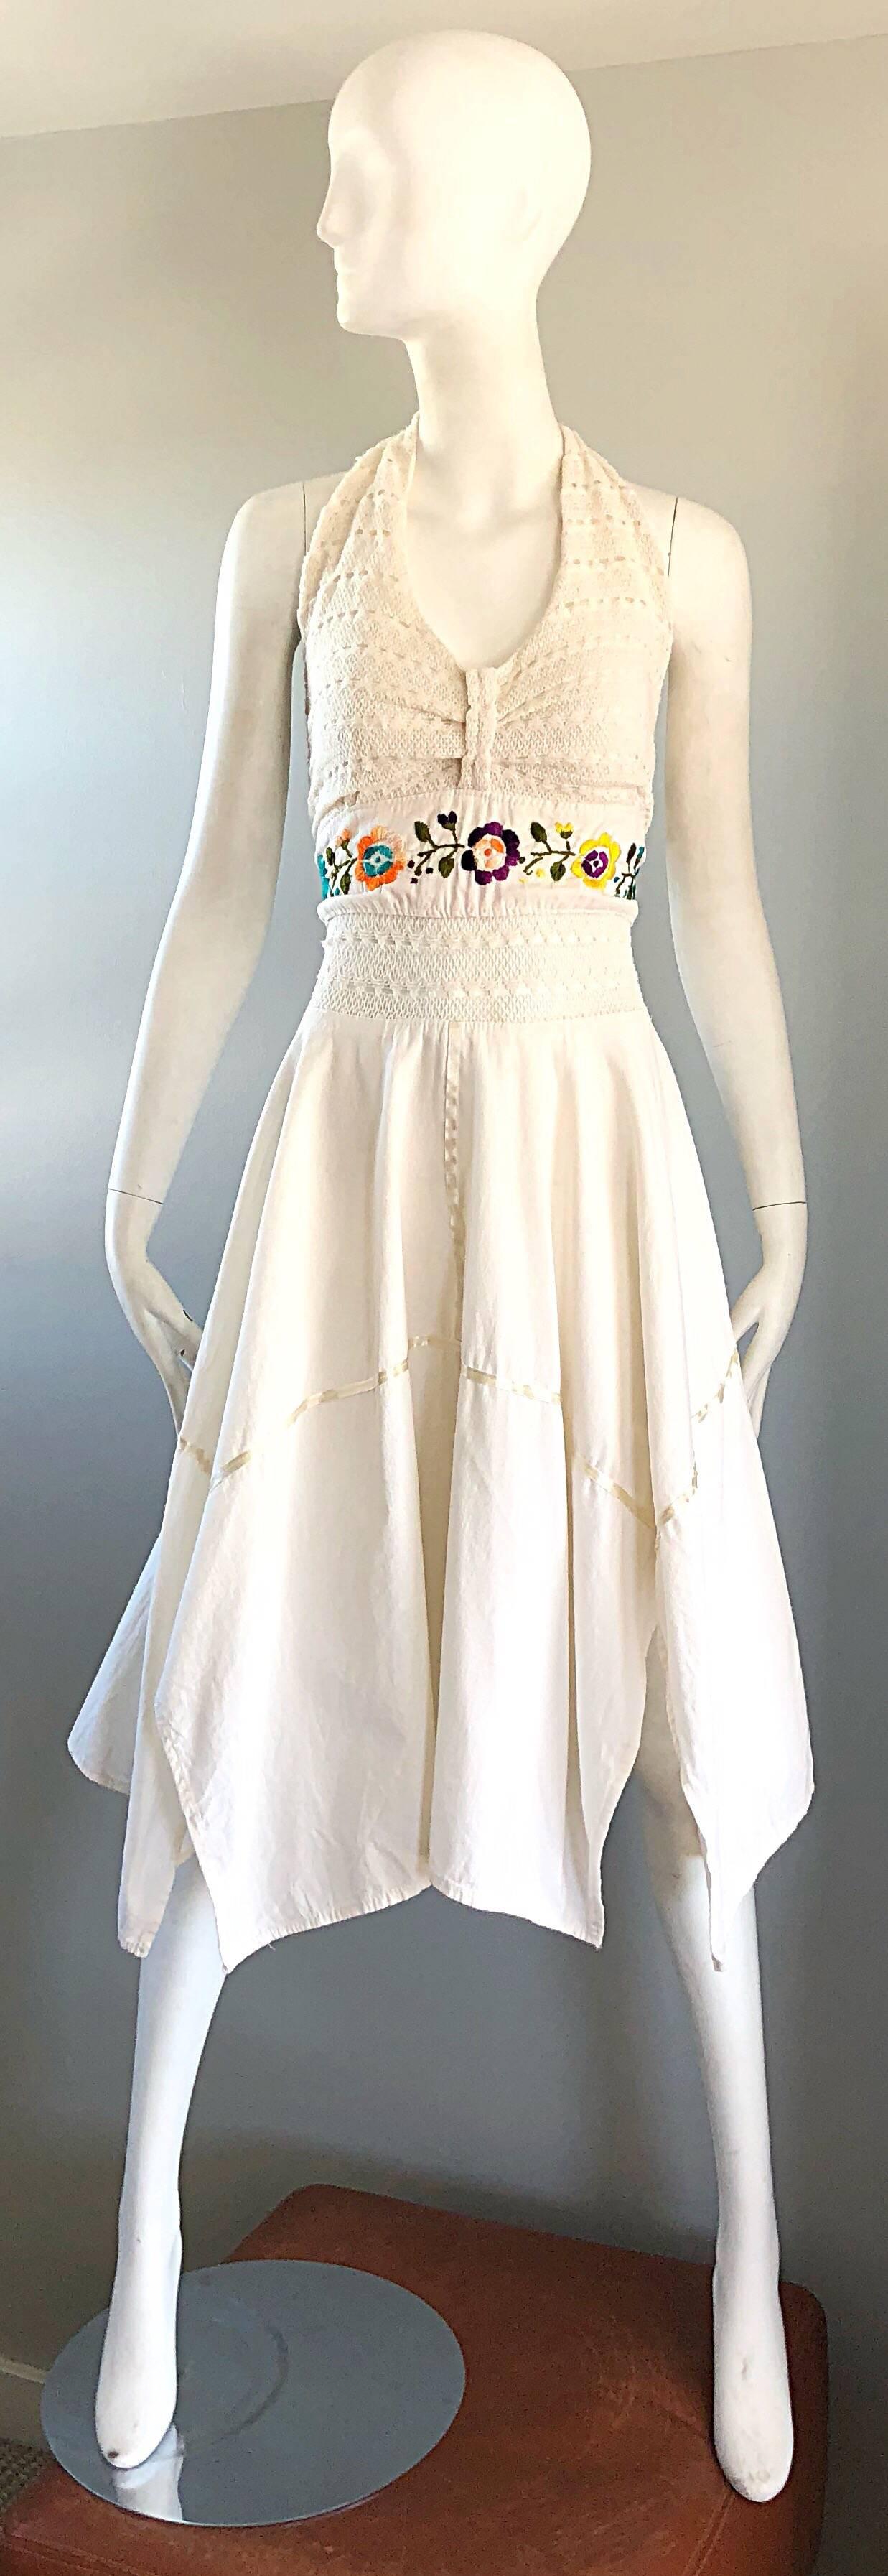 1970s halter dress